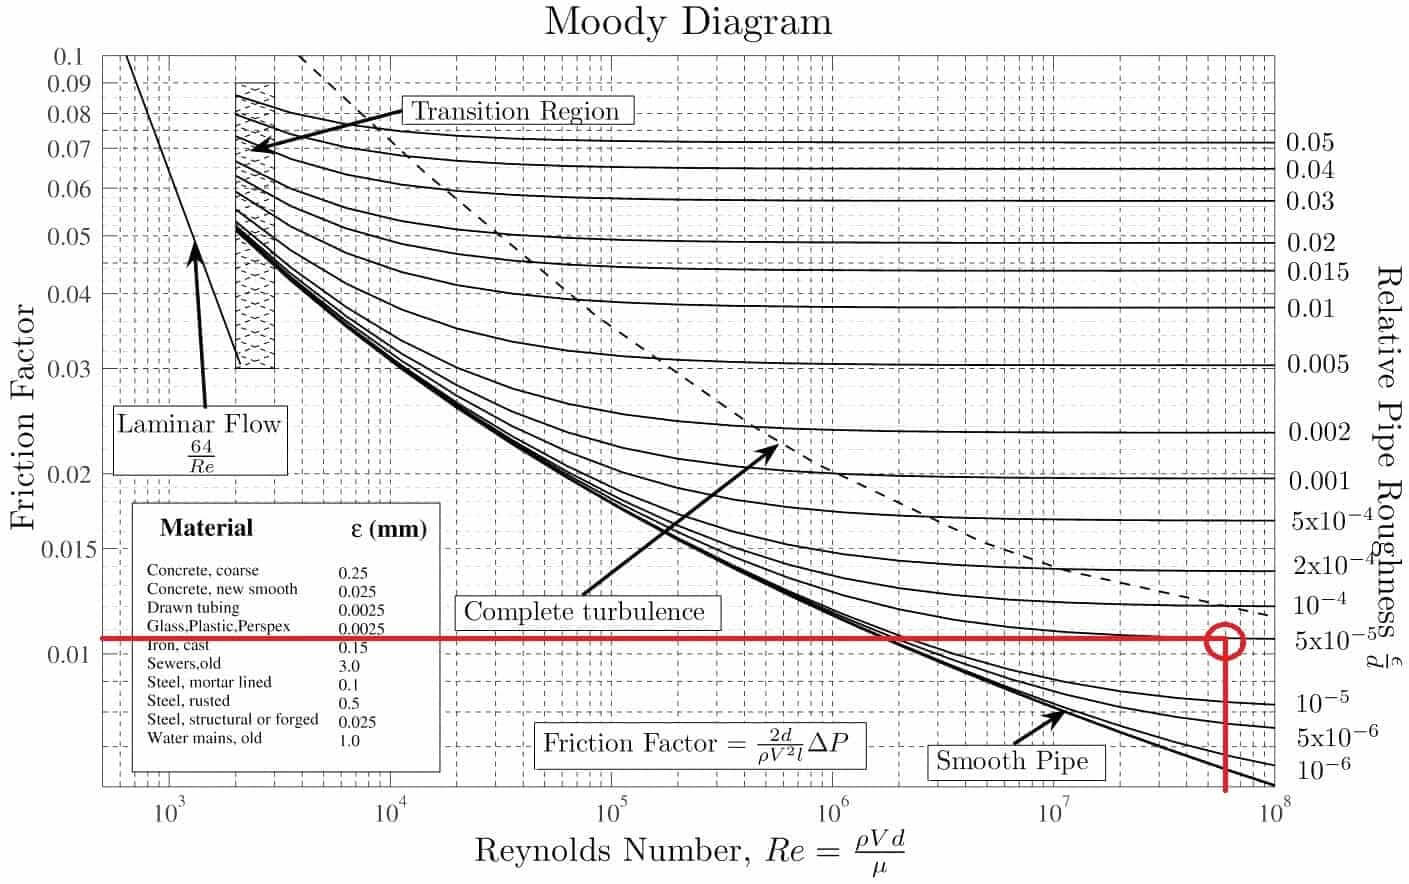 Moody Diagram for Reynolds Number